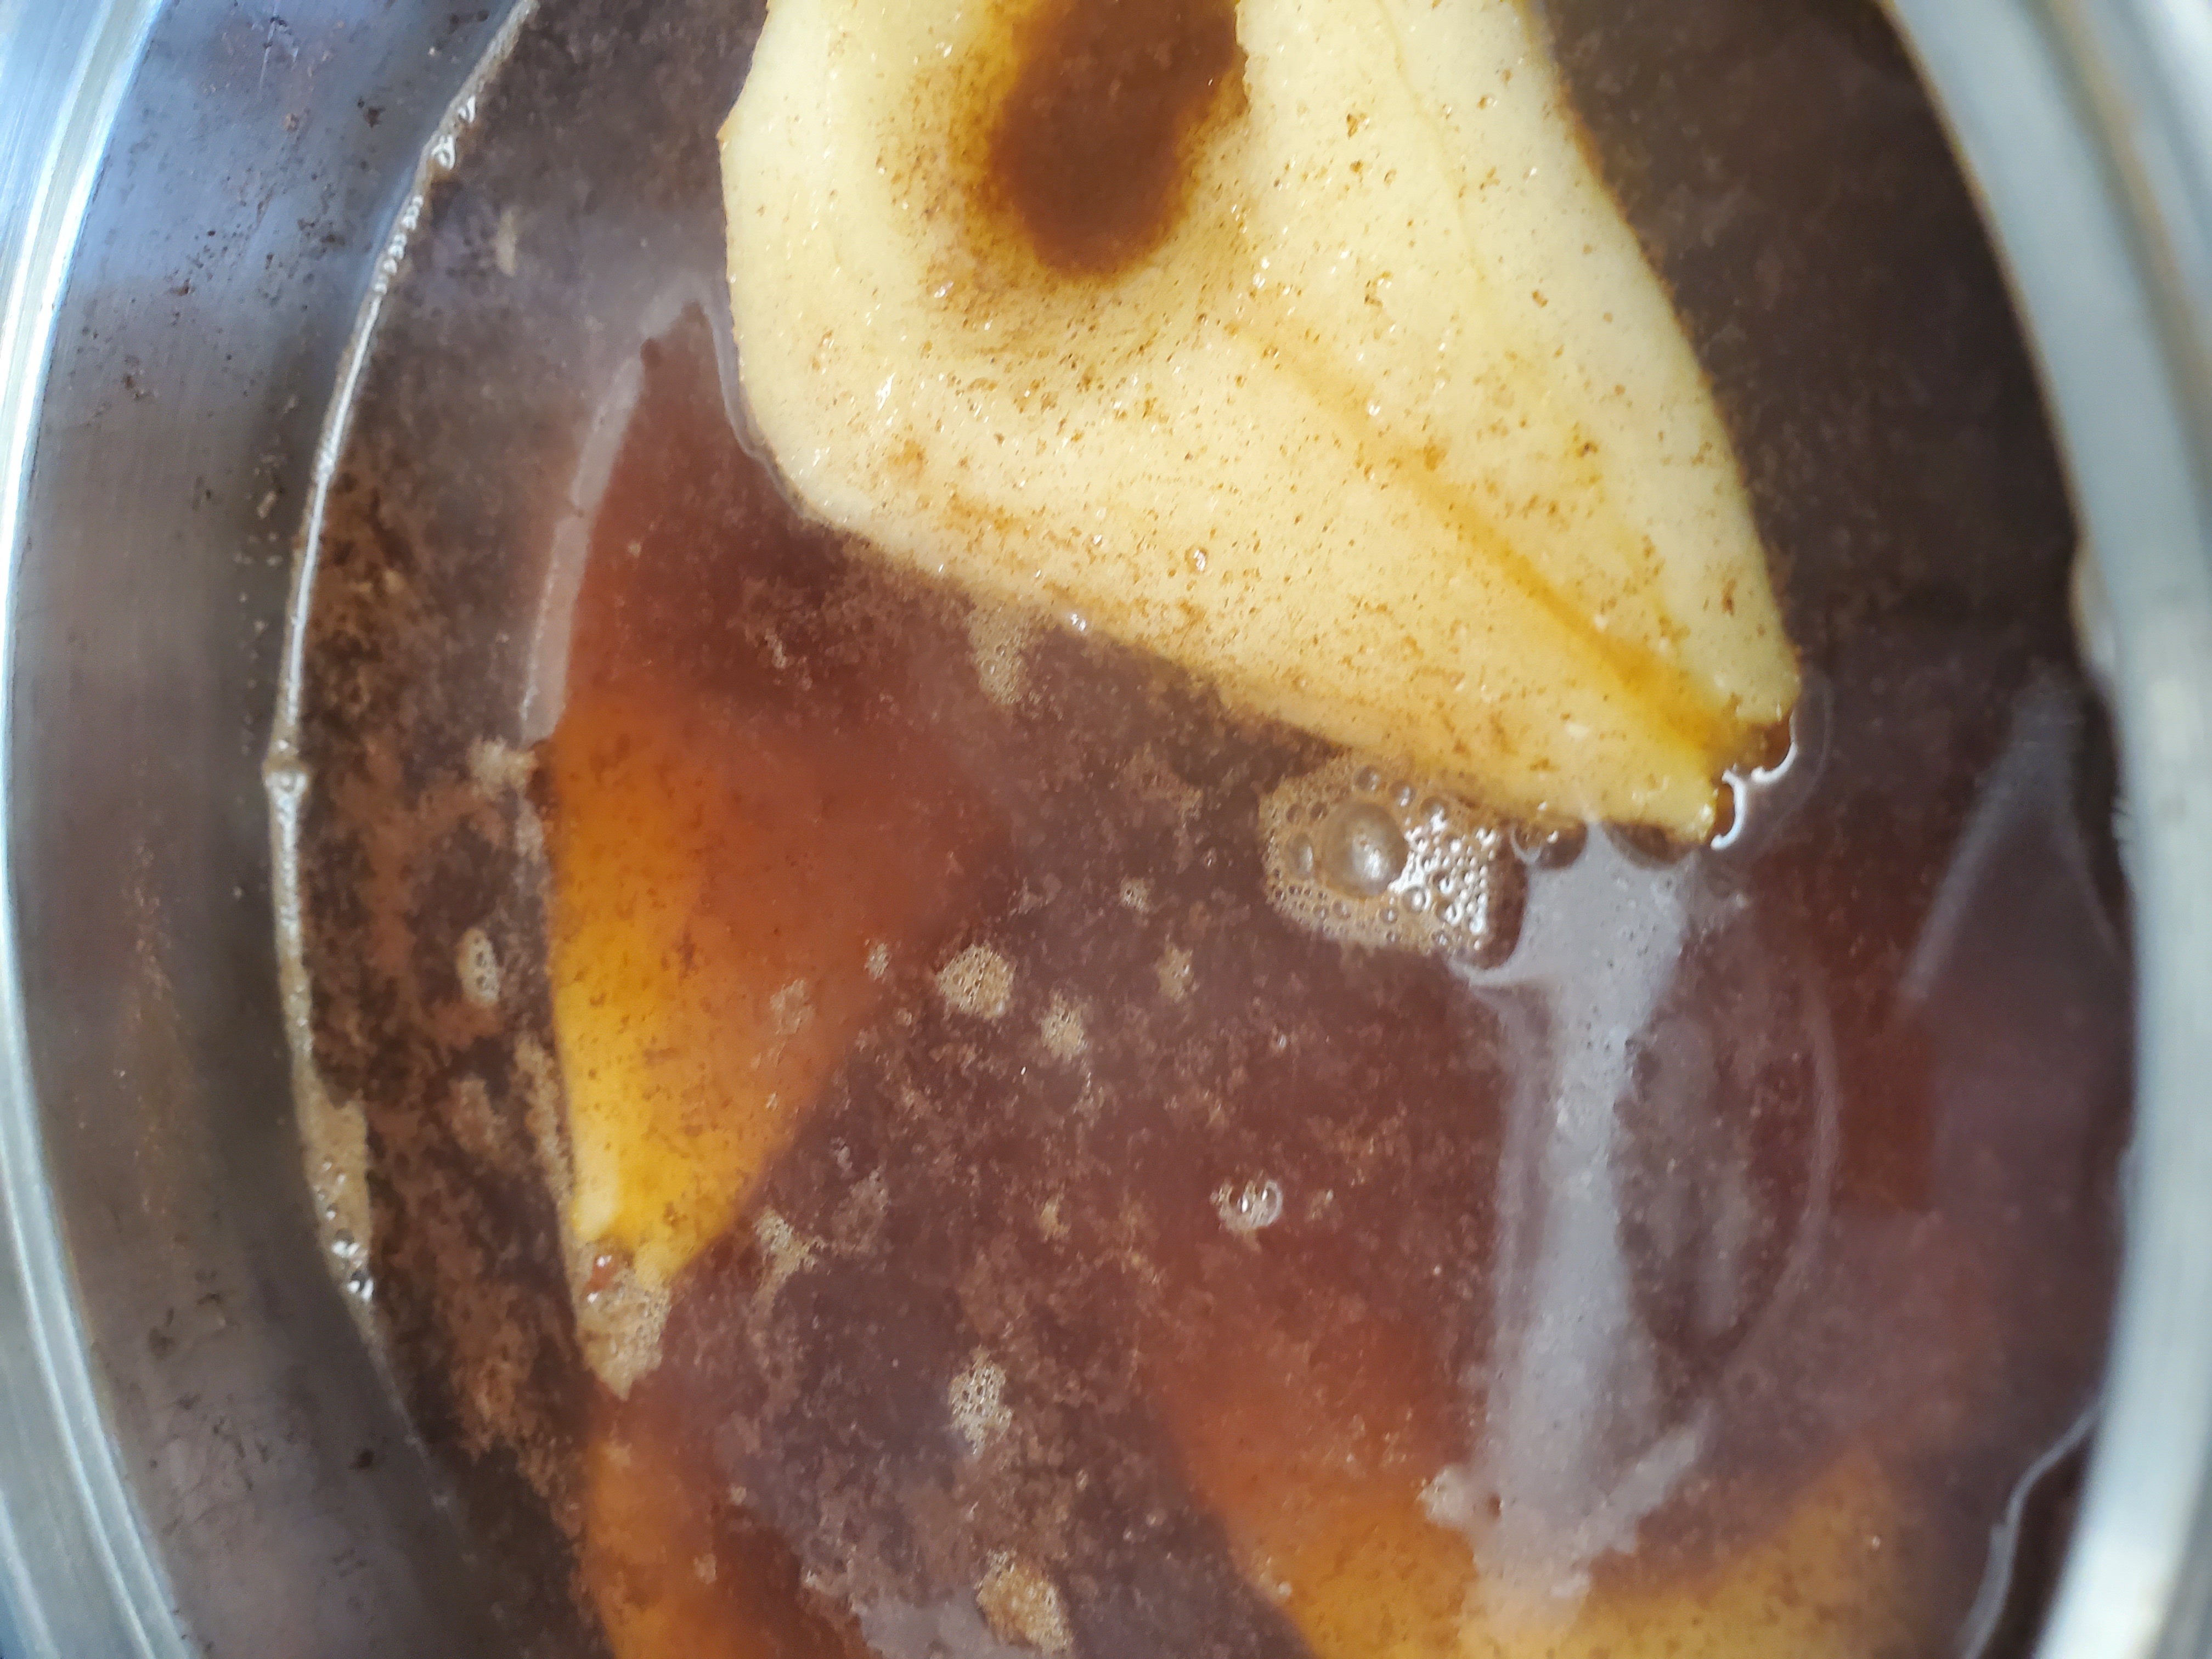 pears cut in half submerged in cinnamon water